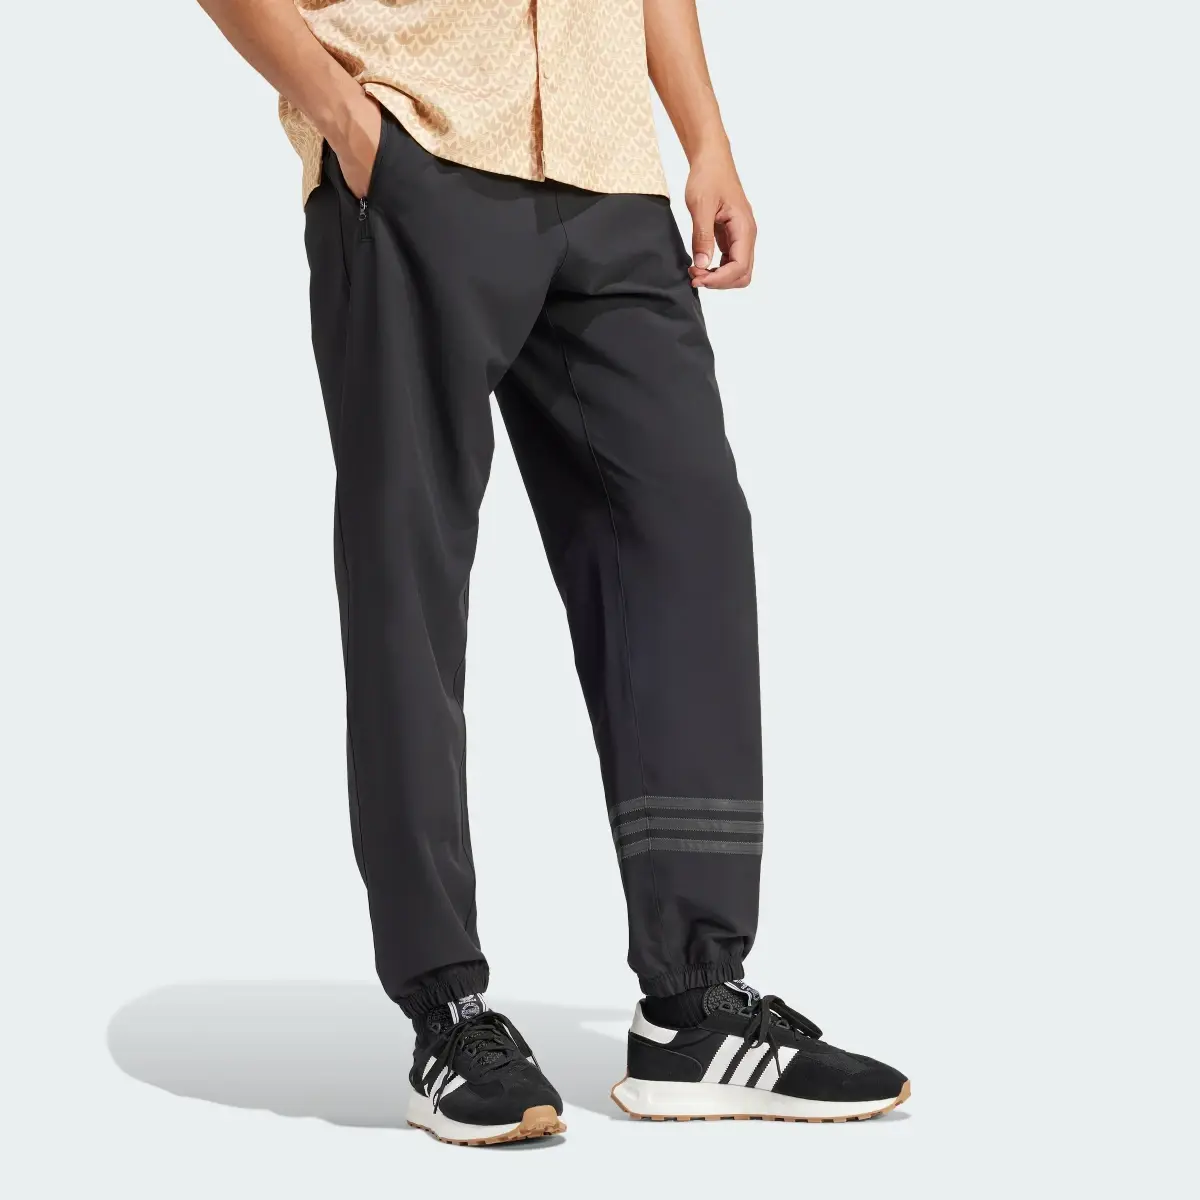 Adidas Street Neuclassic Track Pants. 3